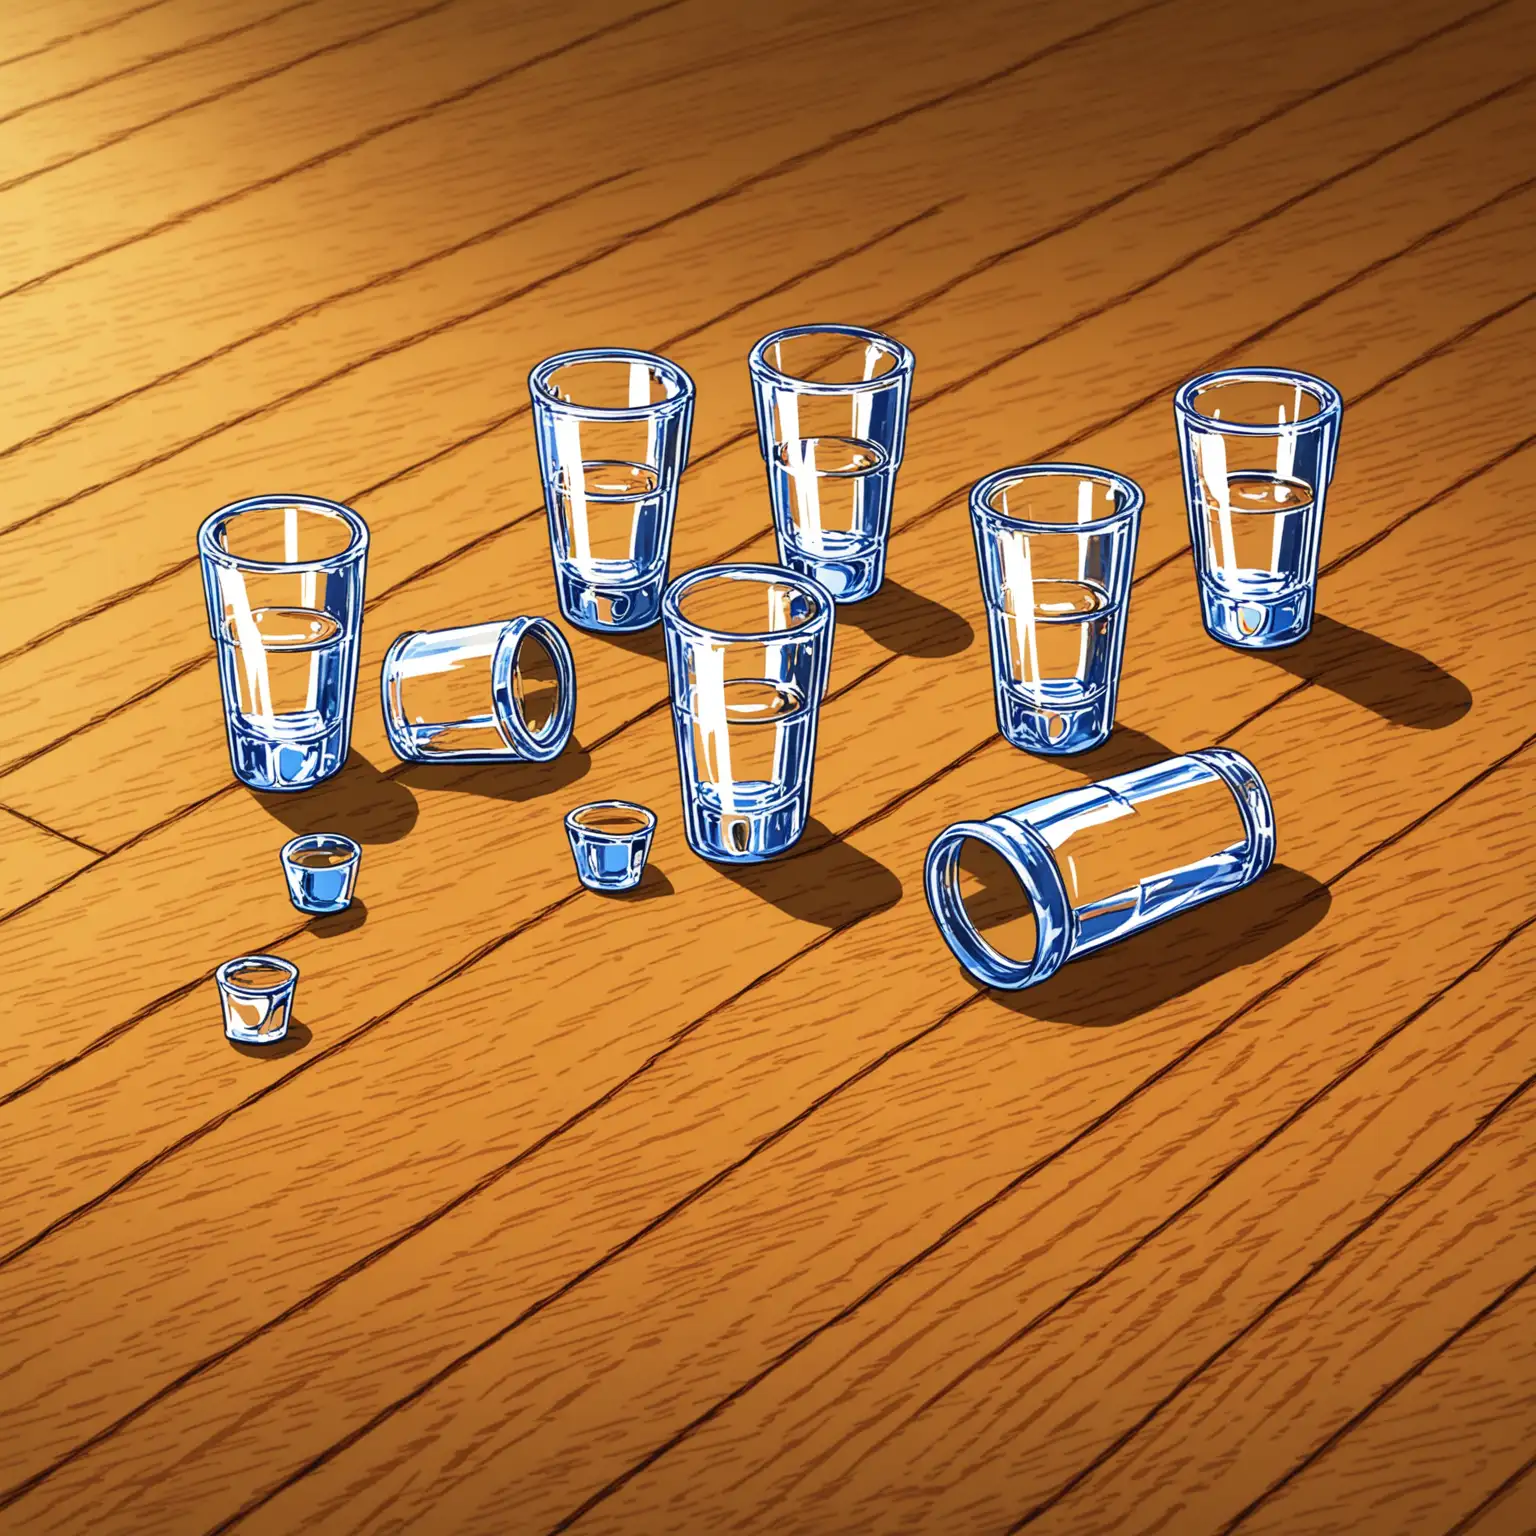 Four Cartoon Shot Glasses on Wooden Floor